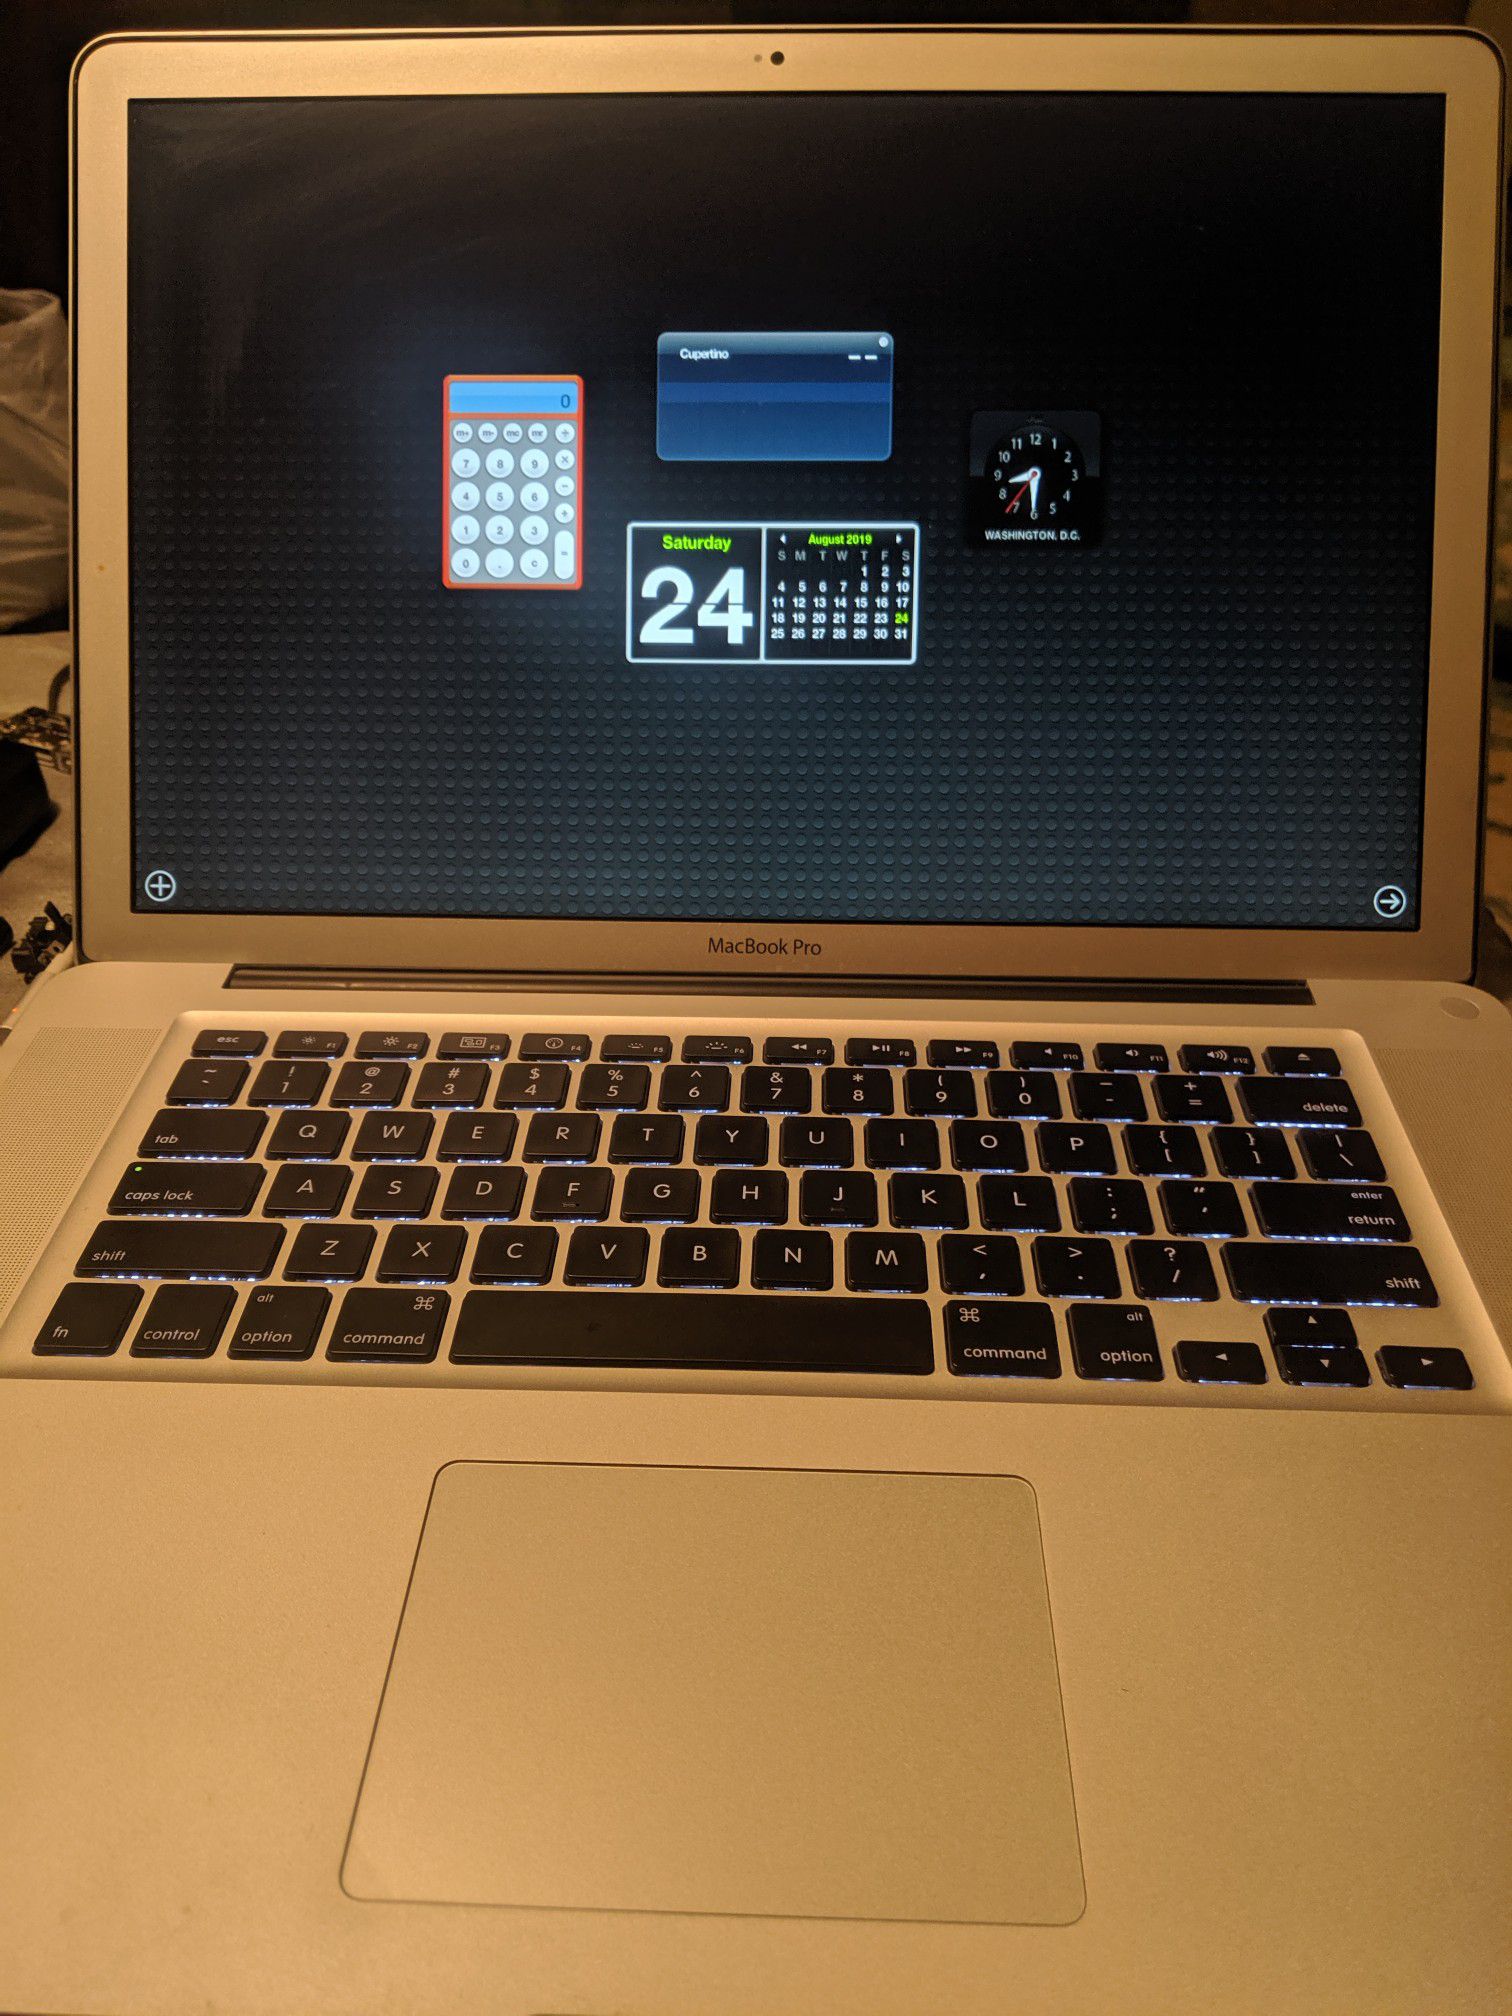 MacBook Pro 15" 3.06 GHz Core 2 Duo 4GB RAM 500GB HDD macOS El Capitan